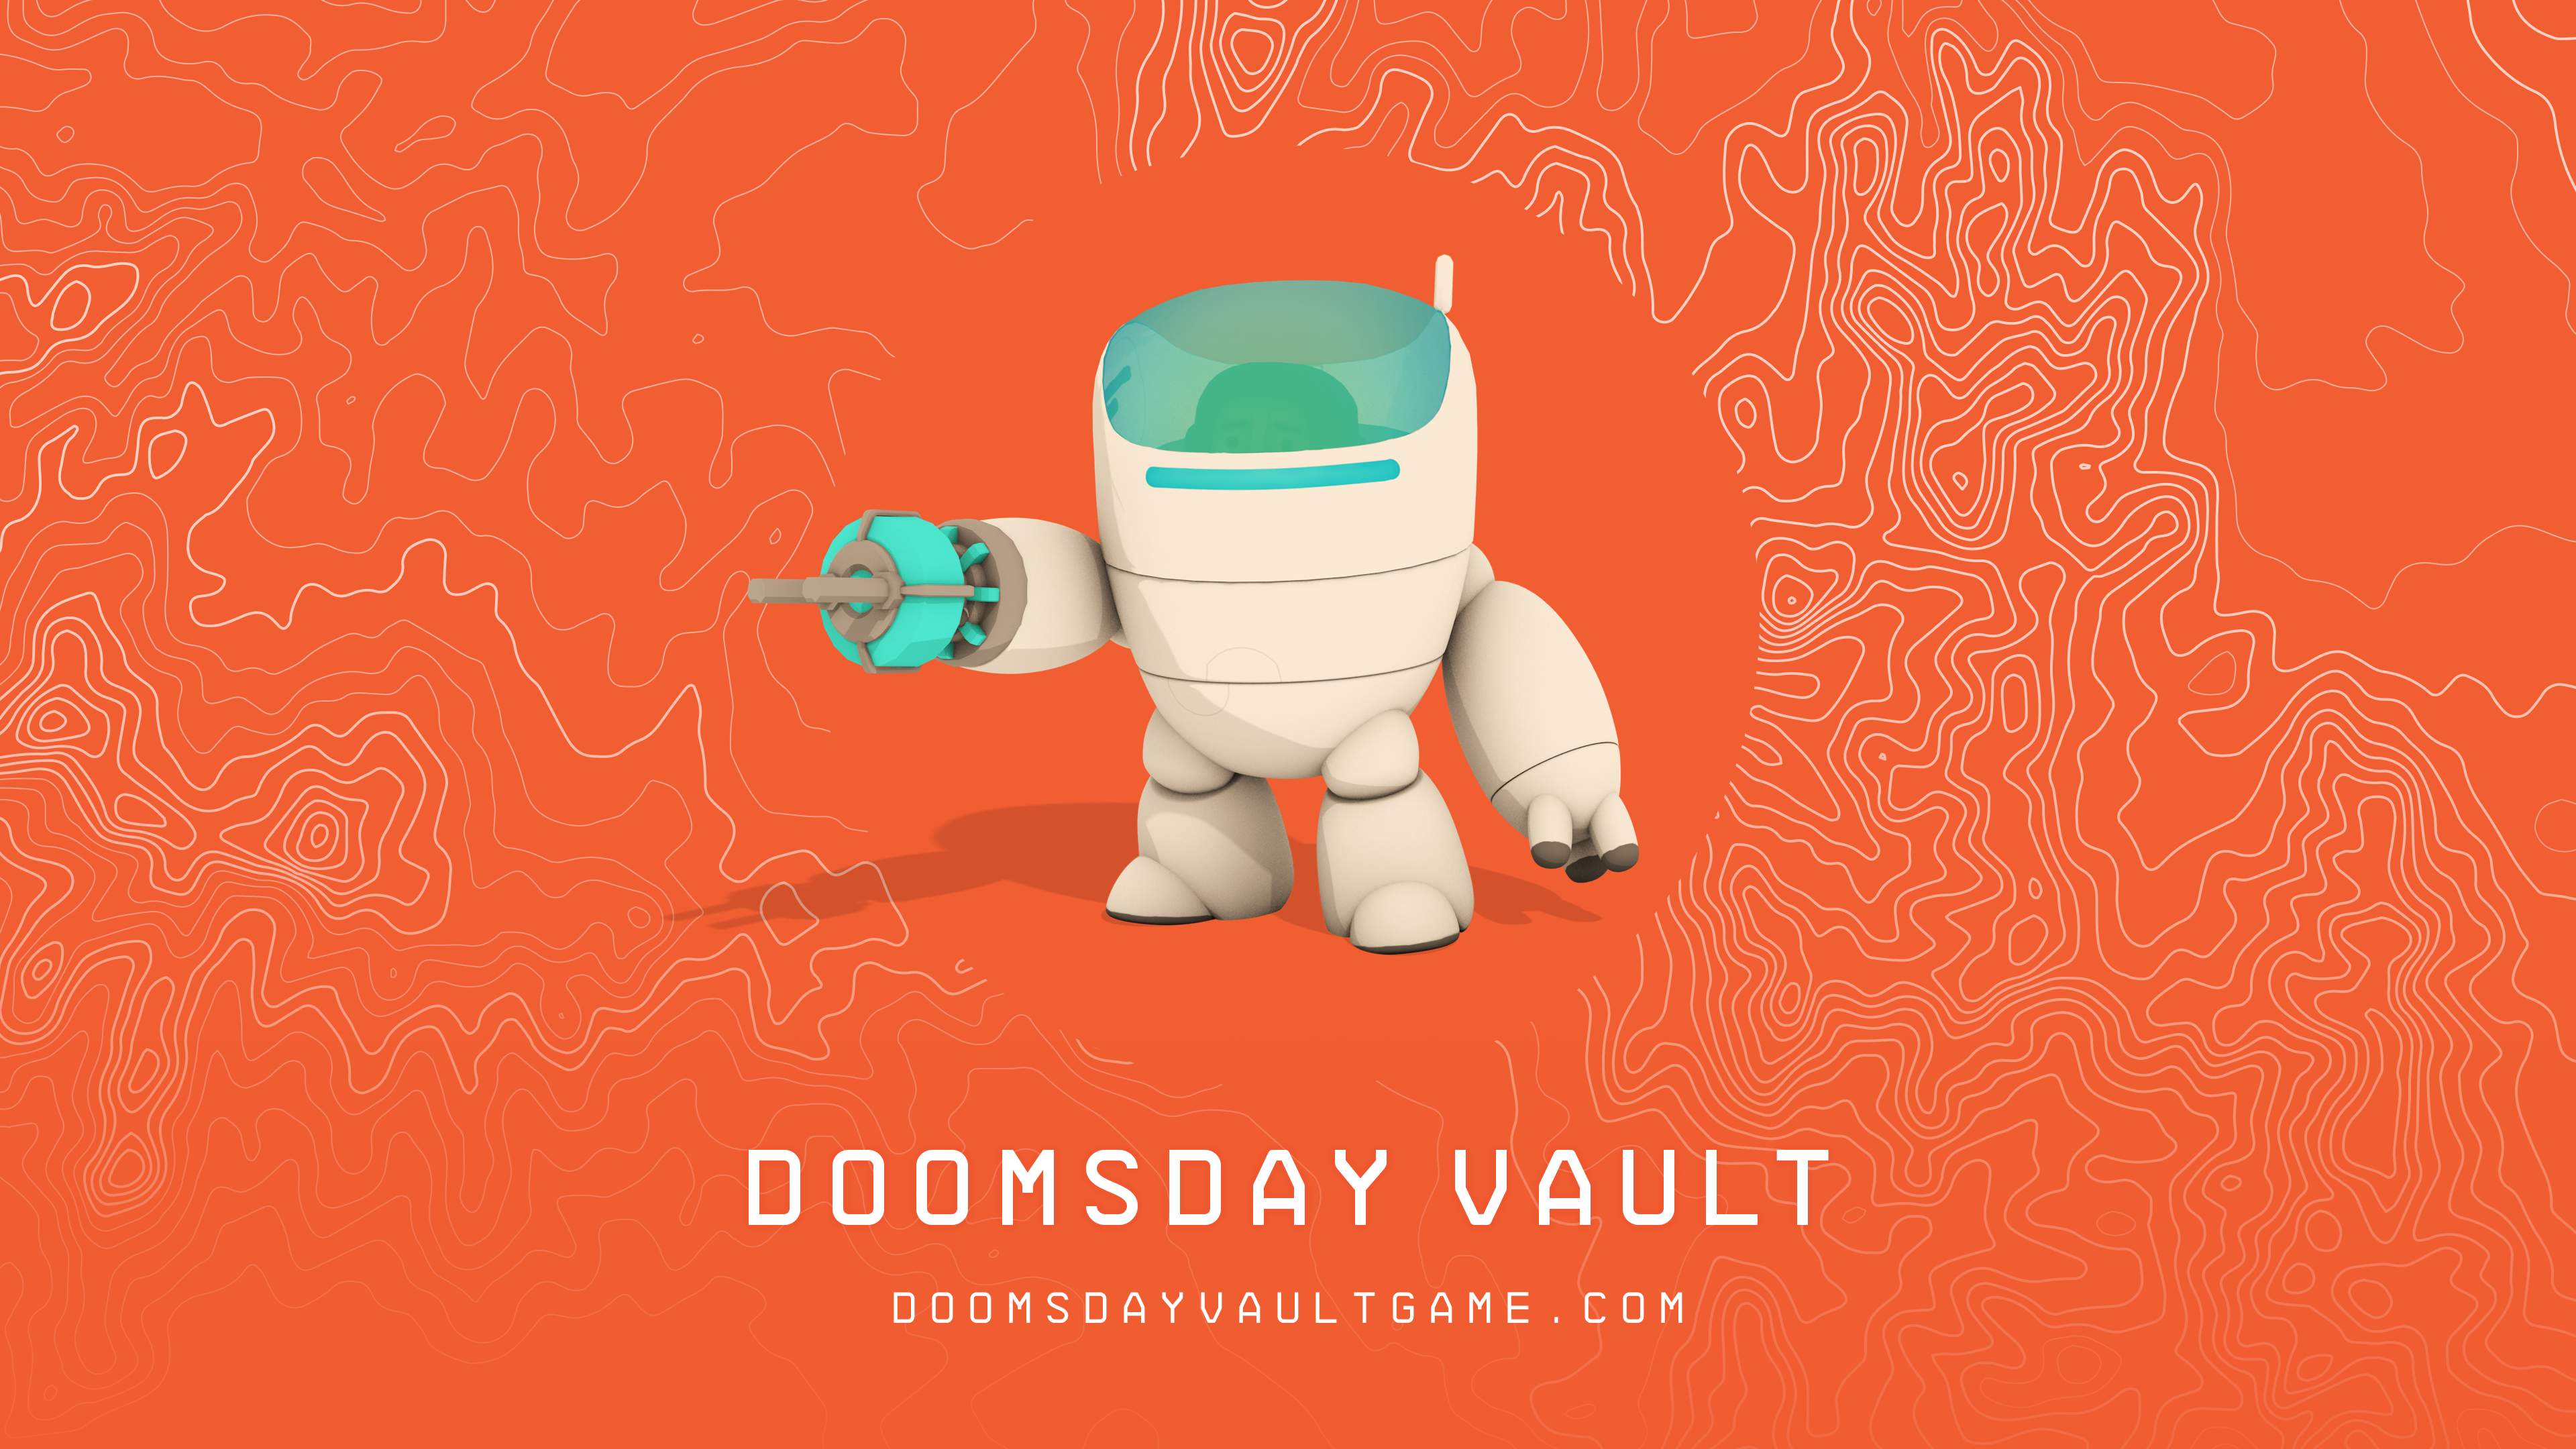 Doomsday_Vault_identity_pose_05.png